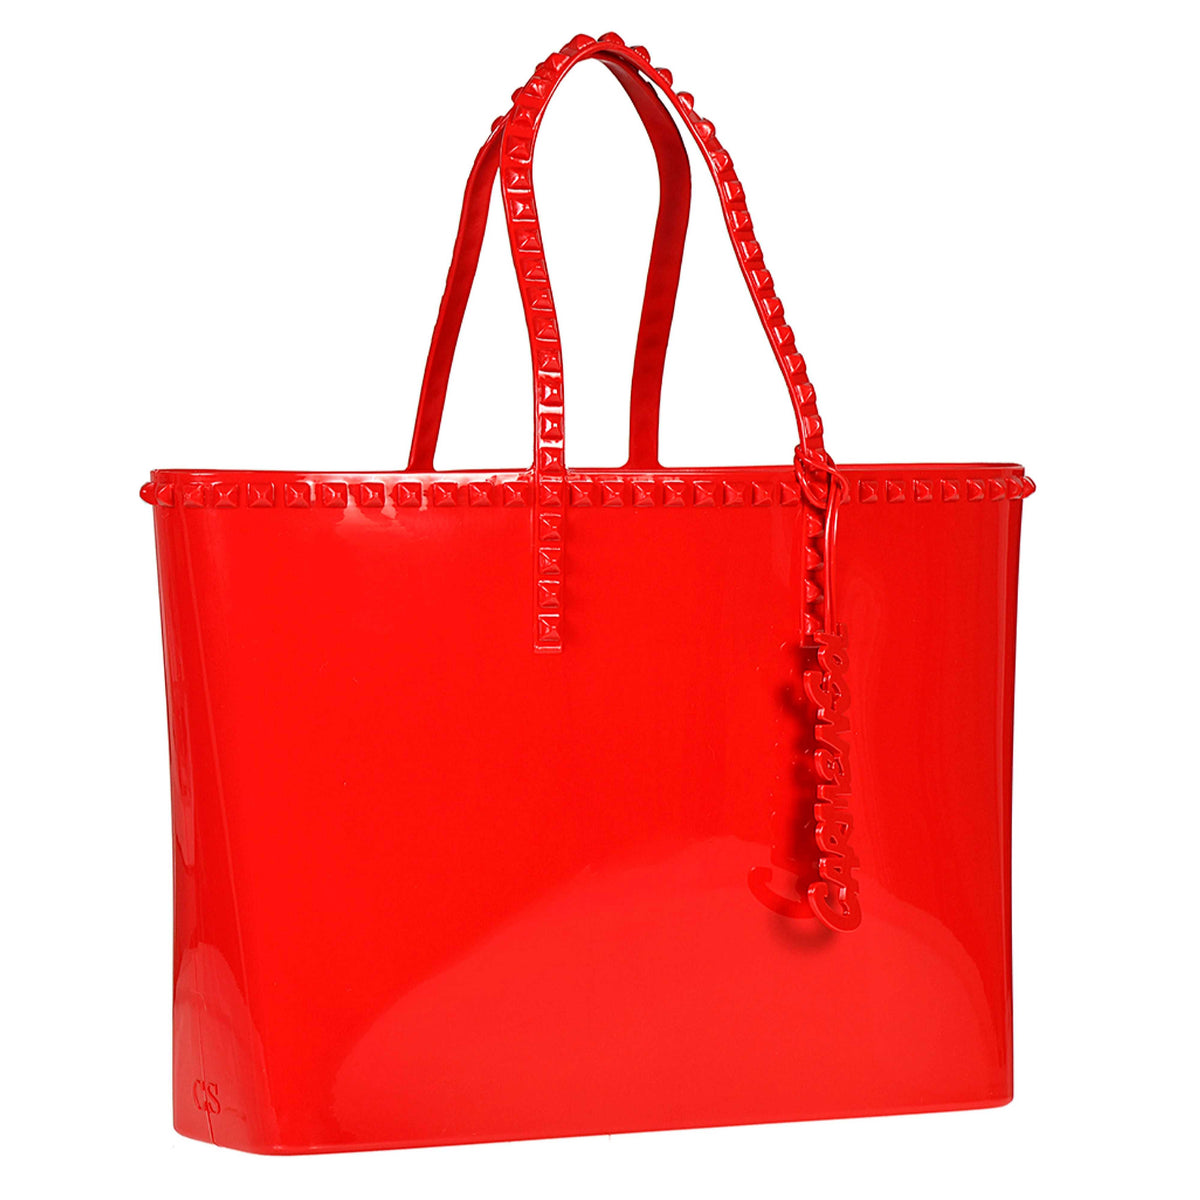 Beach purse in red from Carmen Sol